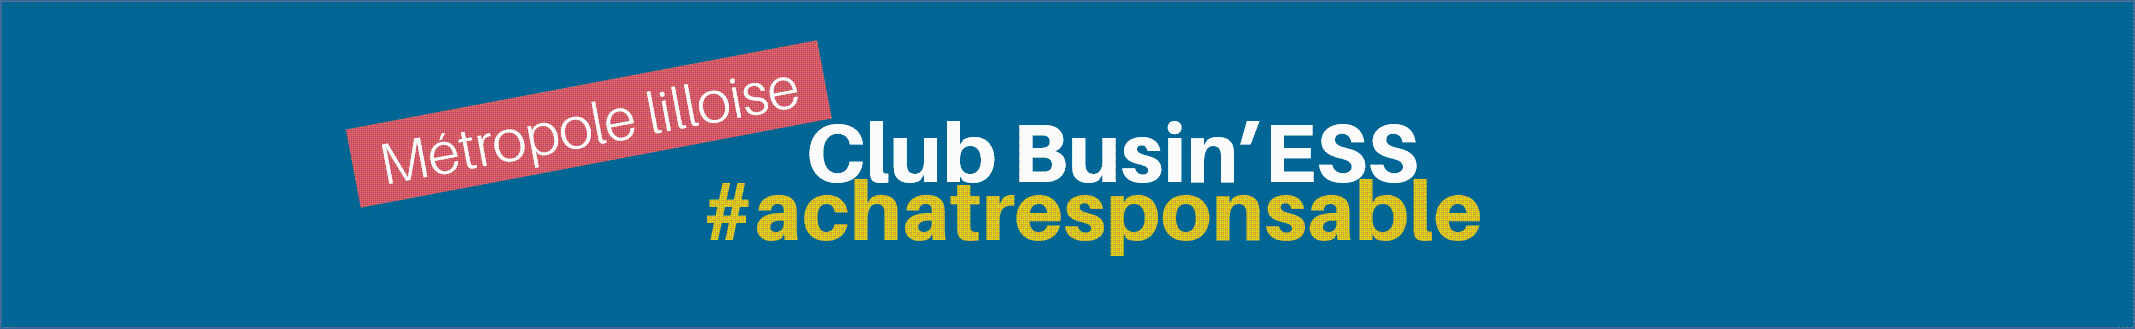 image club business achatresponsable